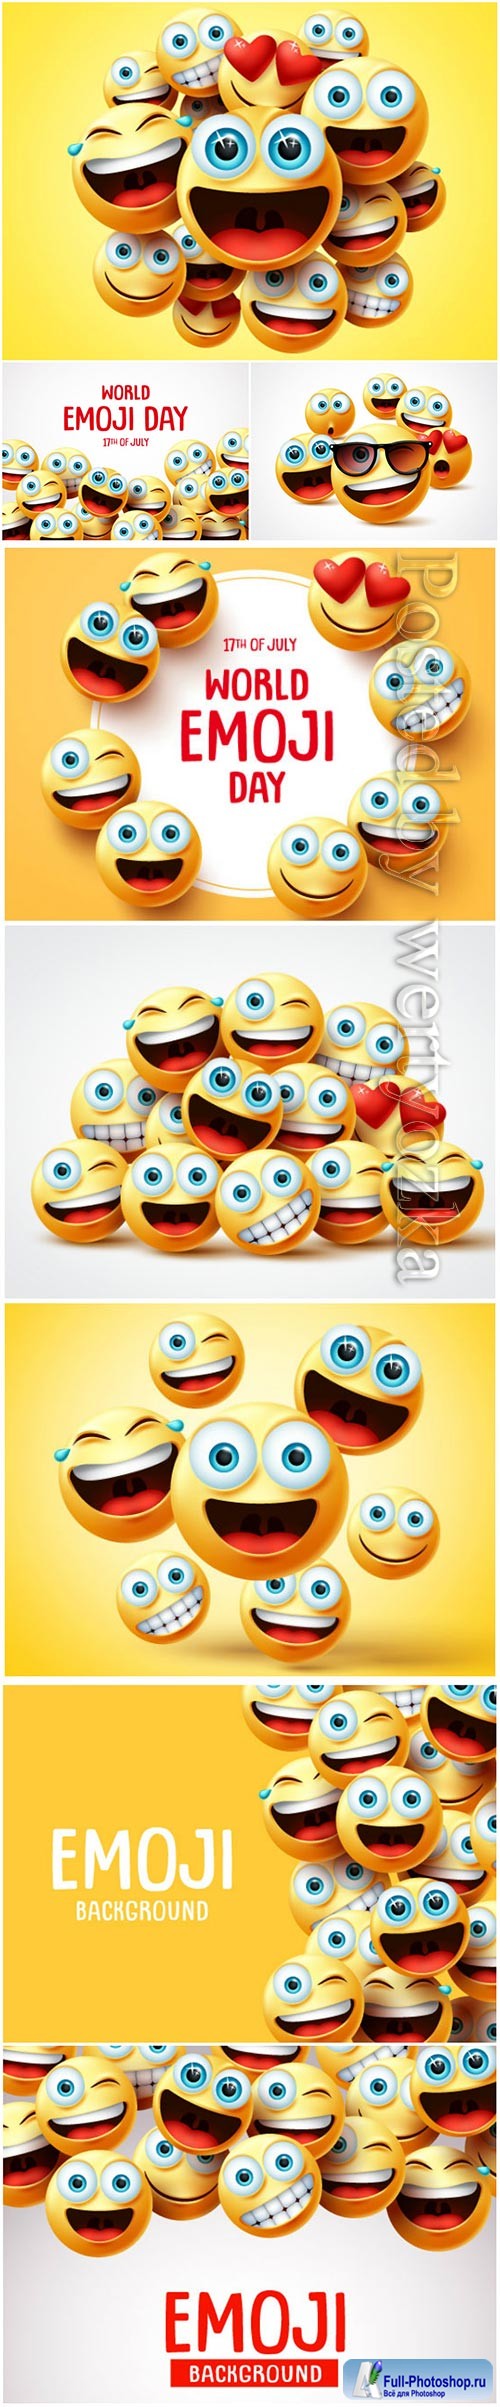 Smiley emoji faces group vector design